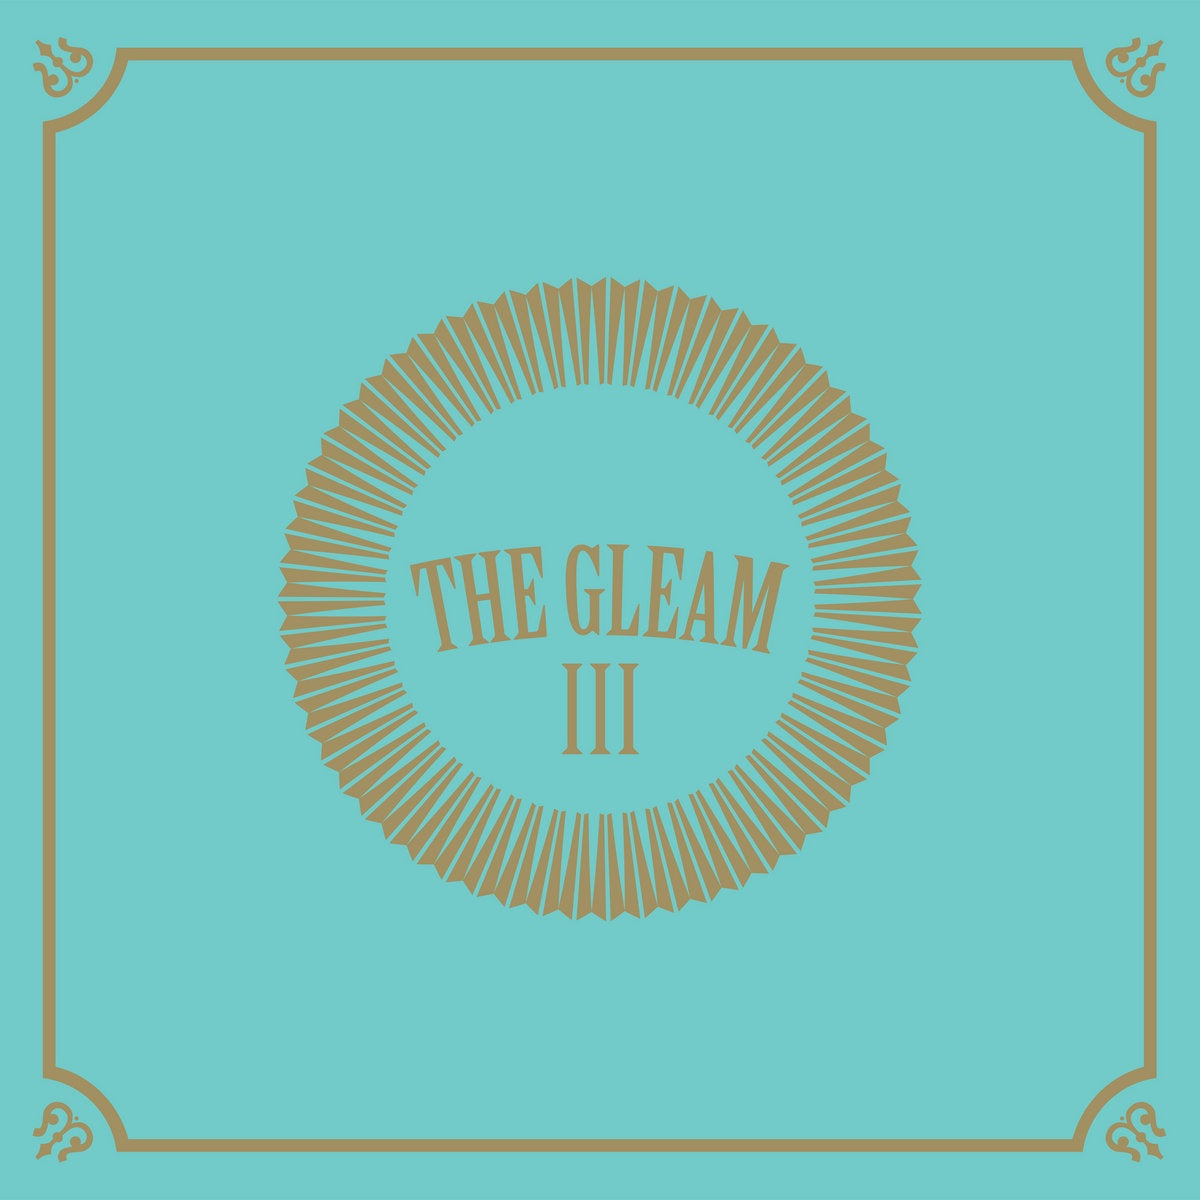 The Avett Brothers ‎– The Gleam III (The Third Gleam) - New LP Record 2020 Loma Vista USA Indie Exclusive Vinyl, Poster & Insert - Pop Rock / Folk Rock